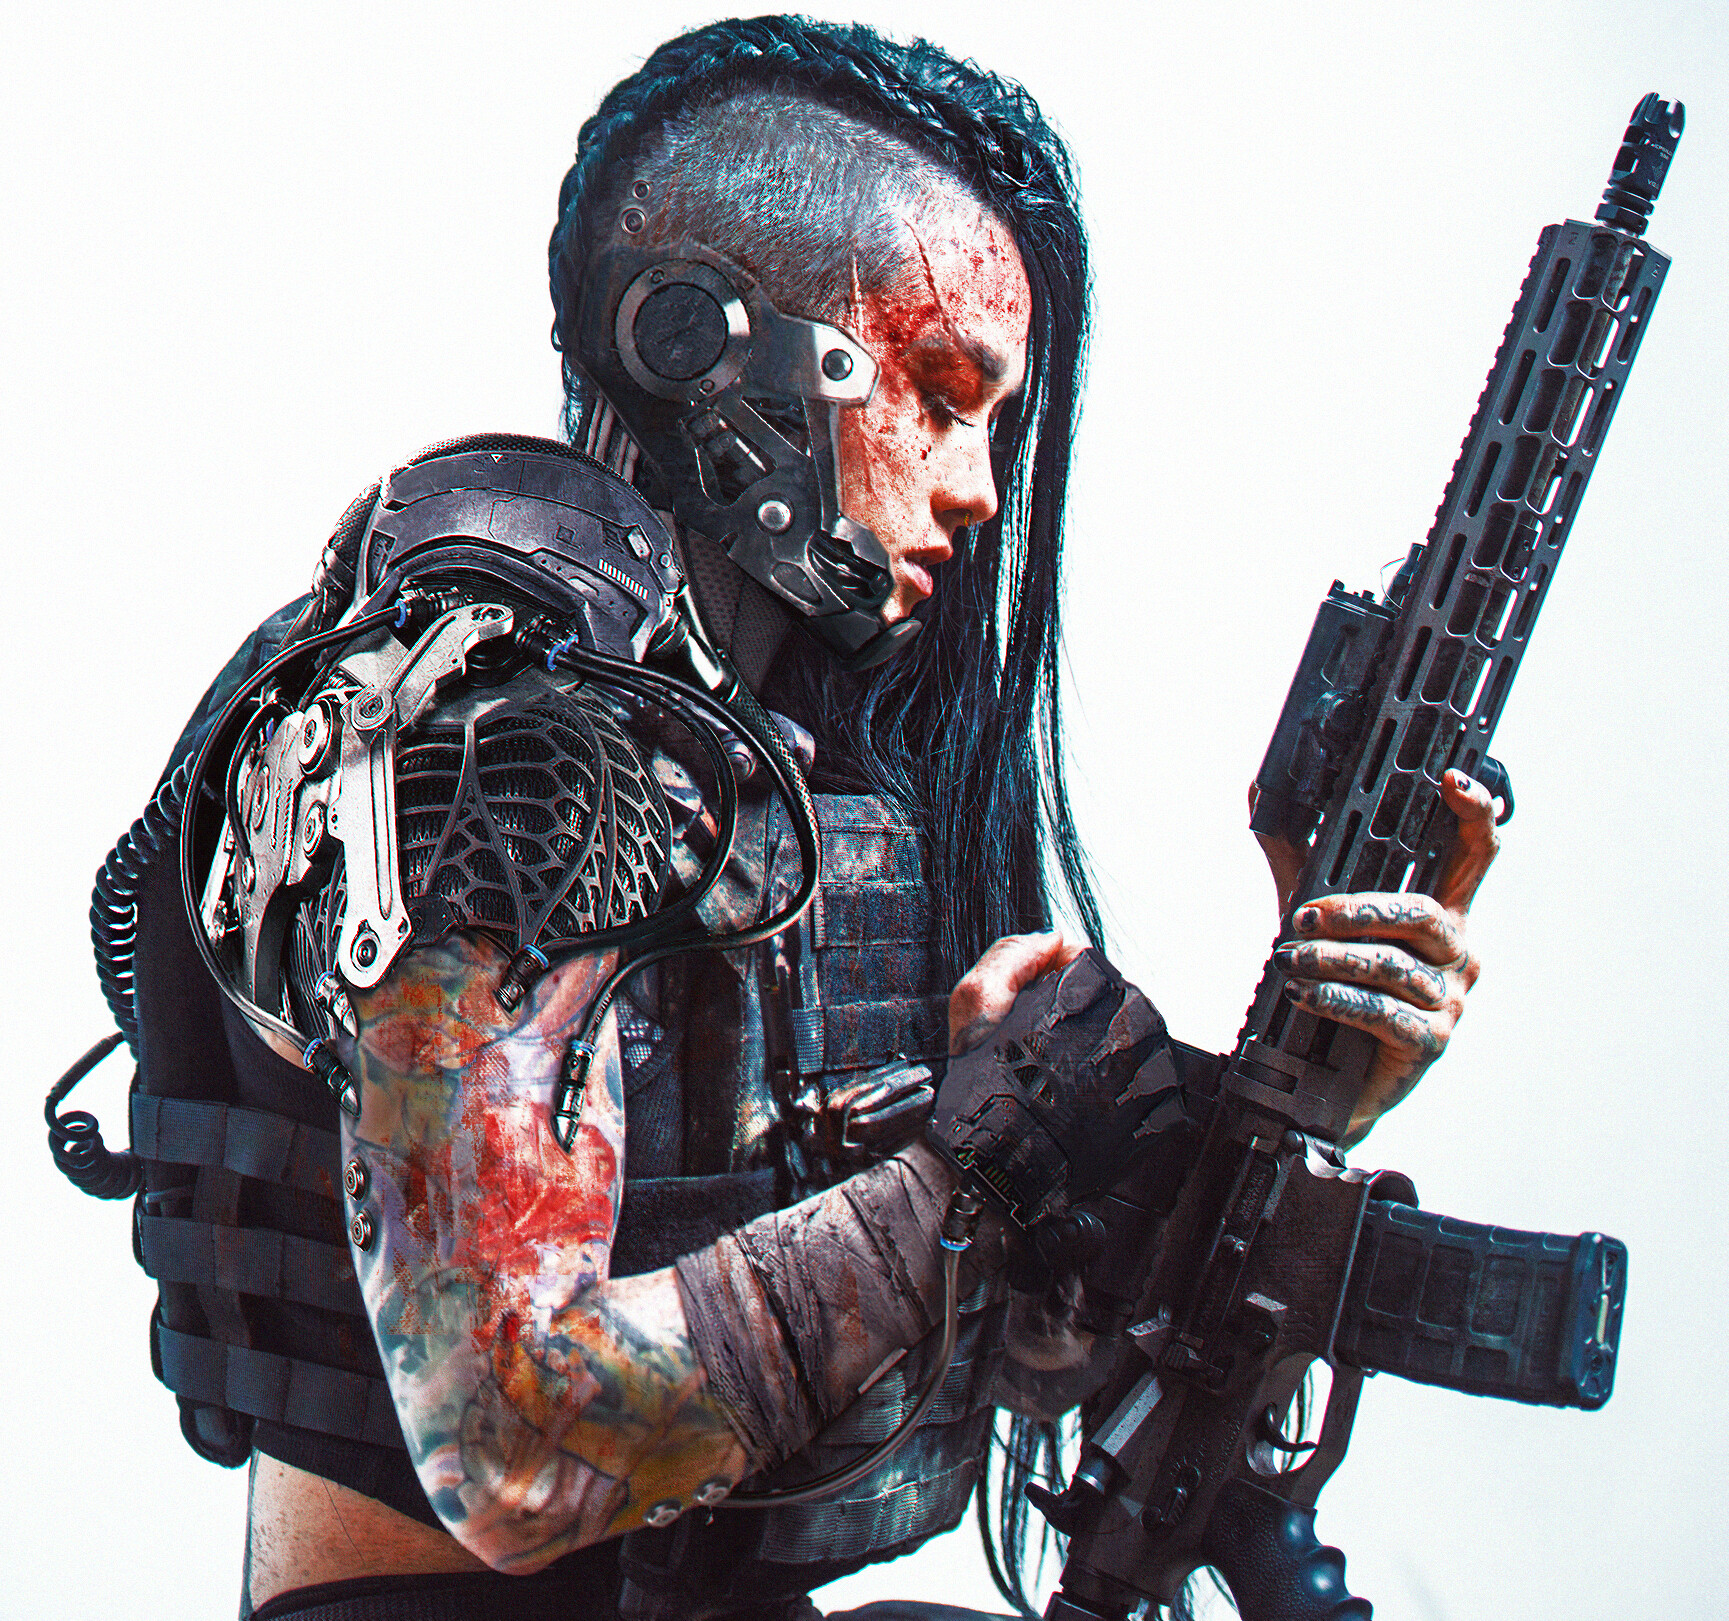 General 1729x1621 artwork Abrar Khan concept art women soldier science fiction futuristic black hair tattoo cyber cyberpunk mechs Clayton Haugen